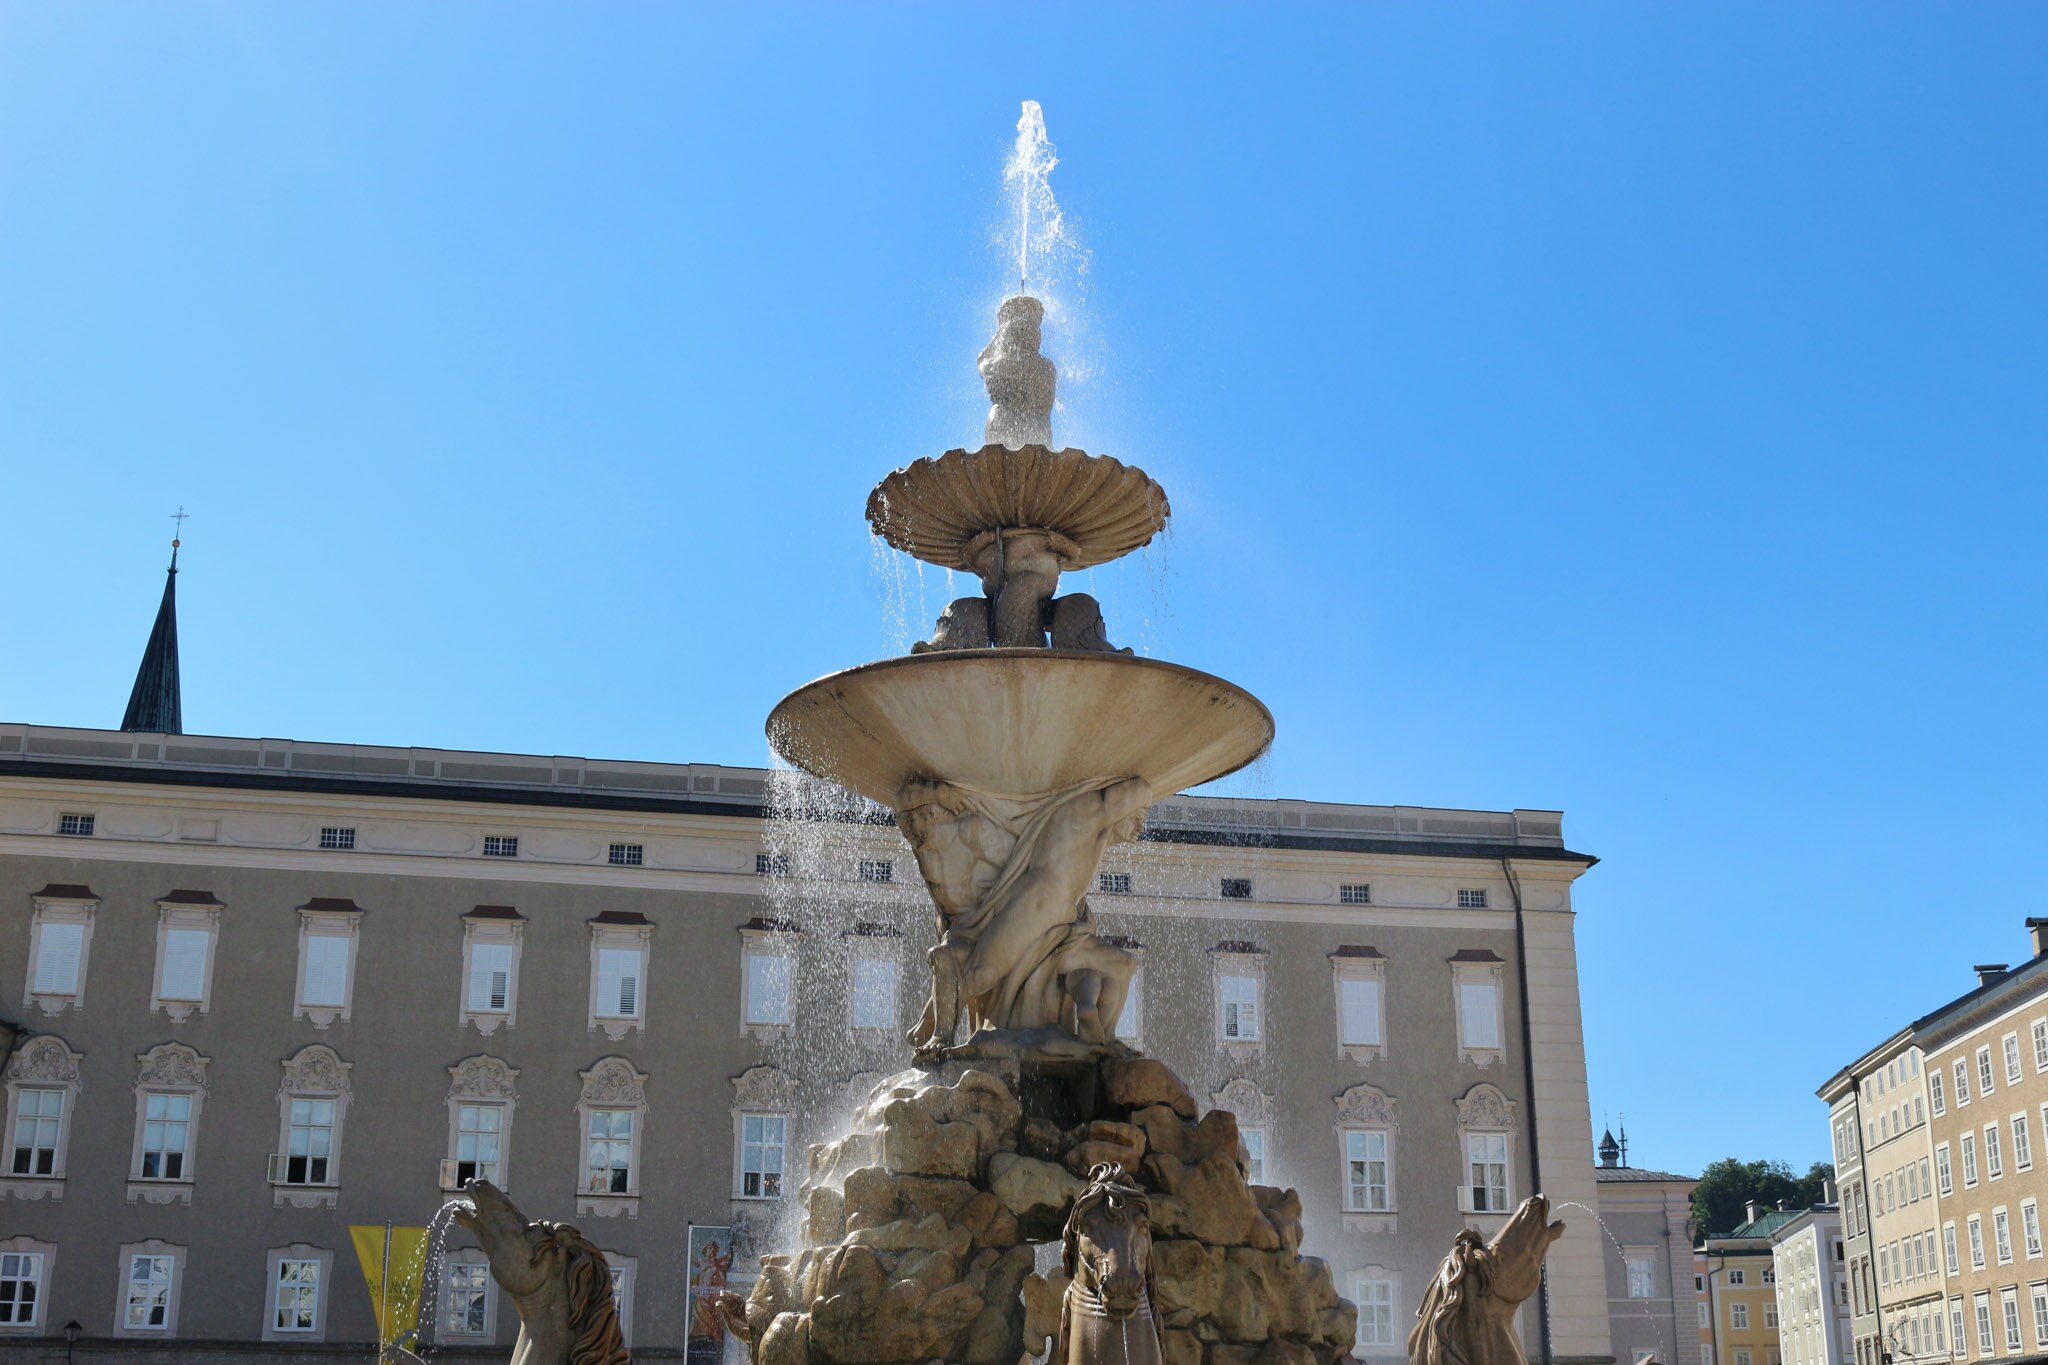 Residenzbrunnen - Fountain